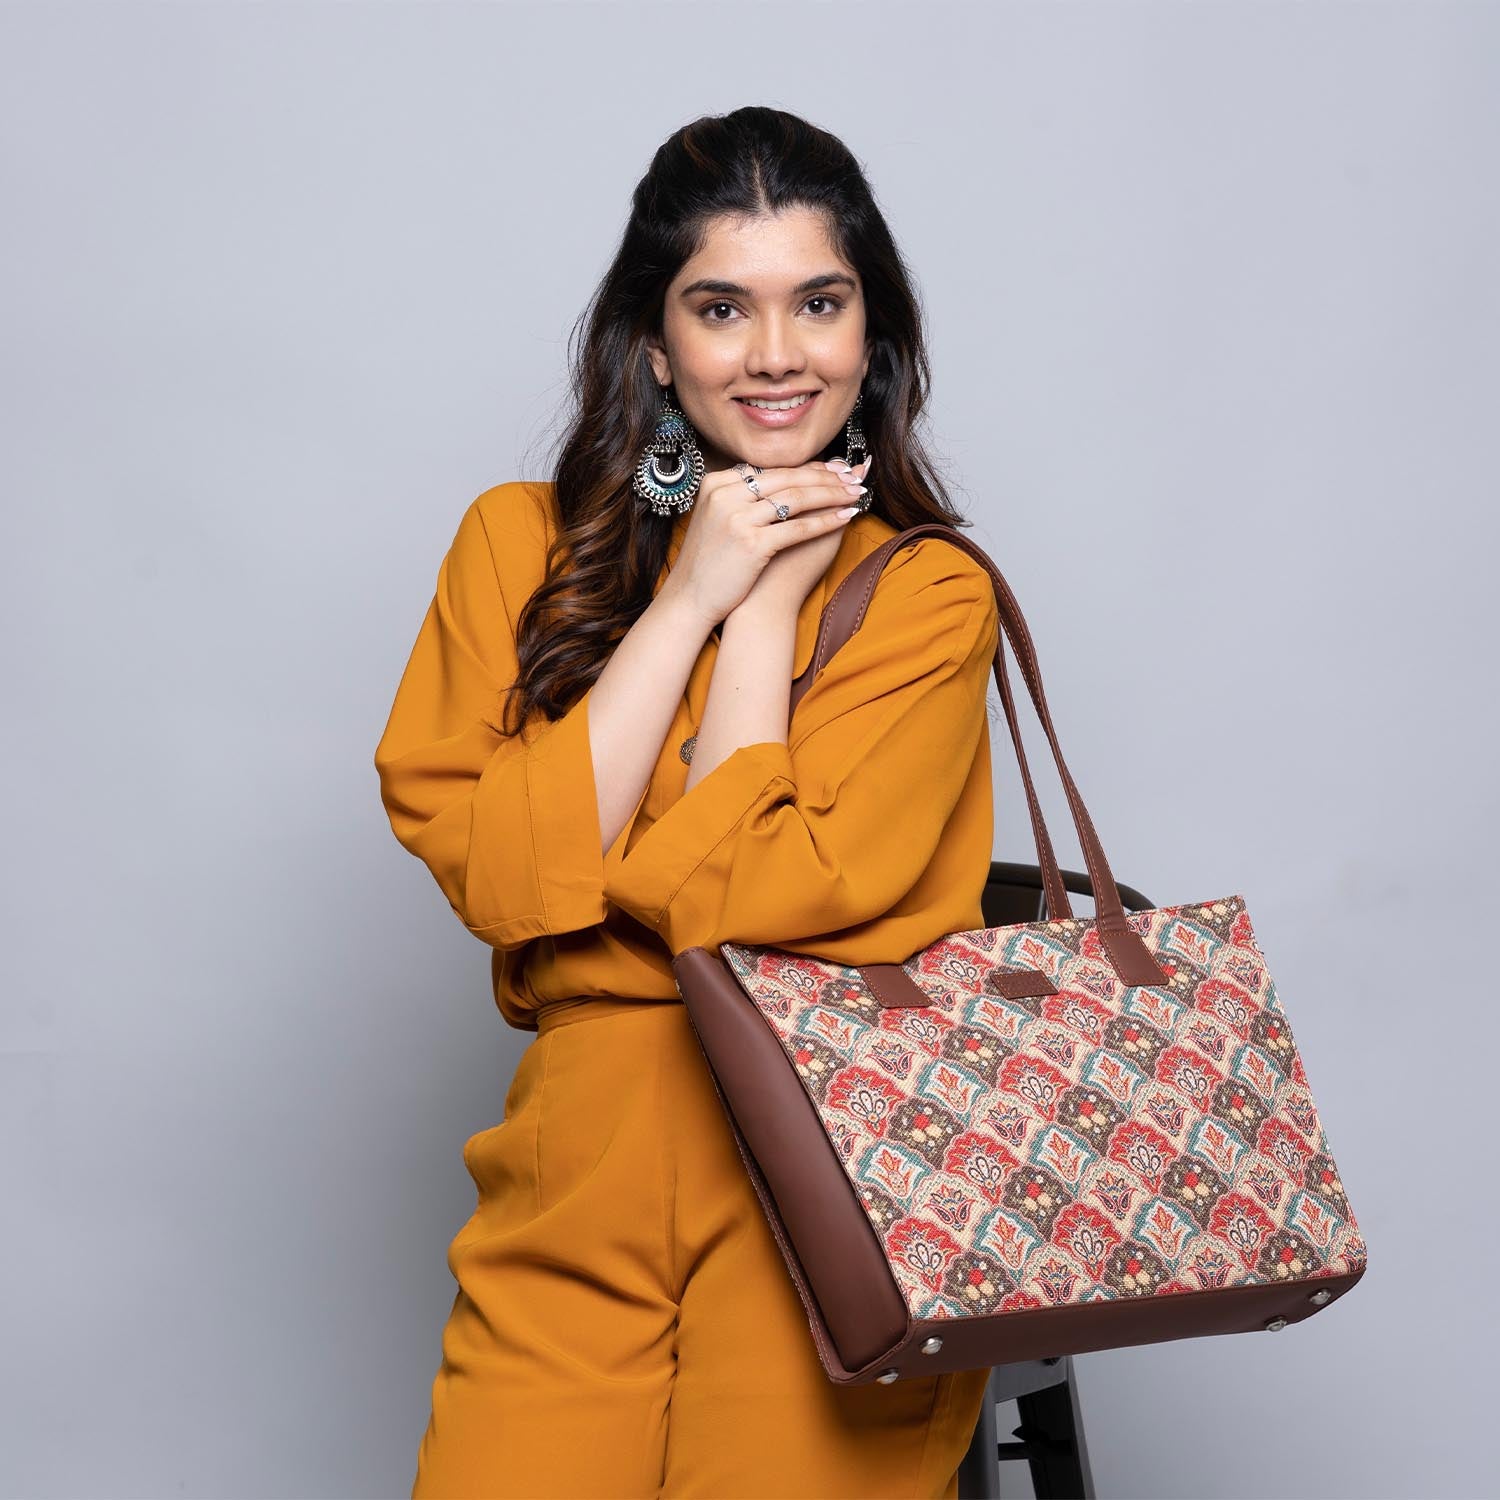 Shop Louis Vuitton Tote Bags for Women